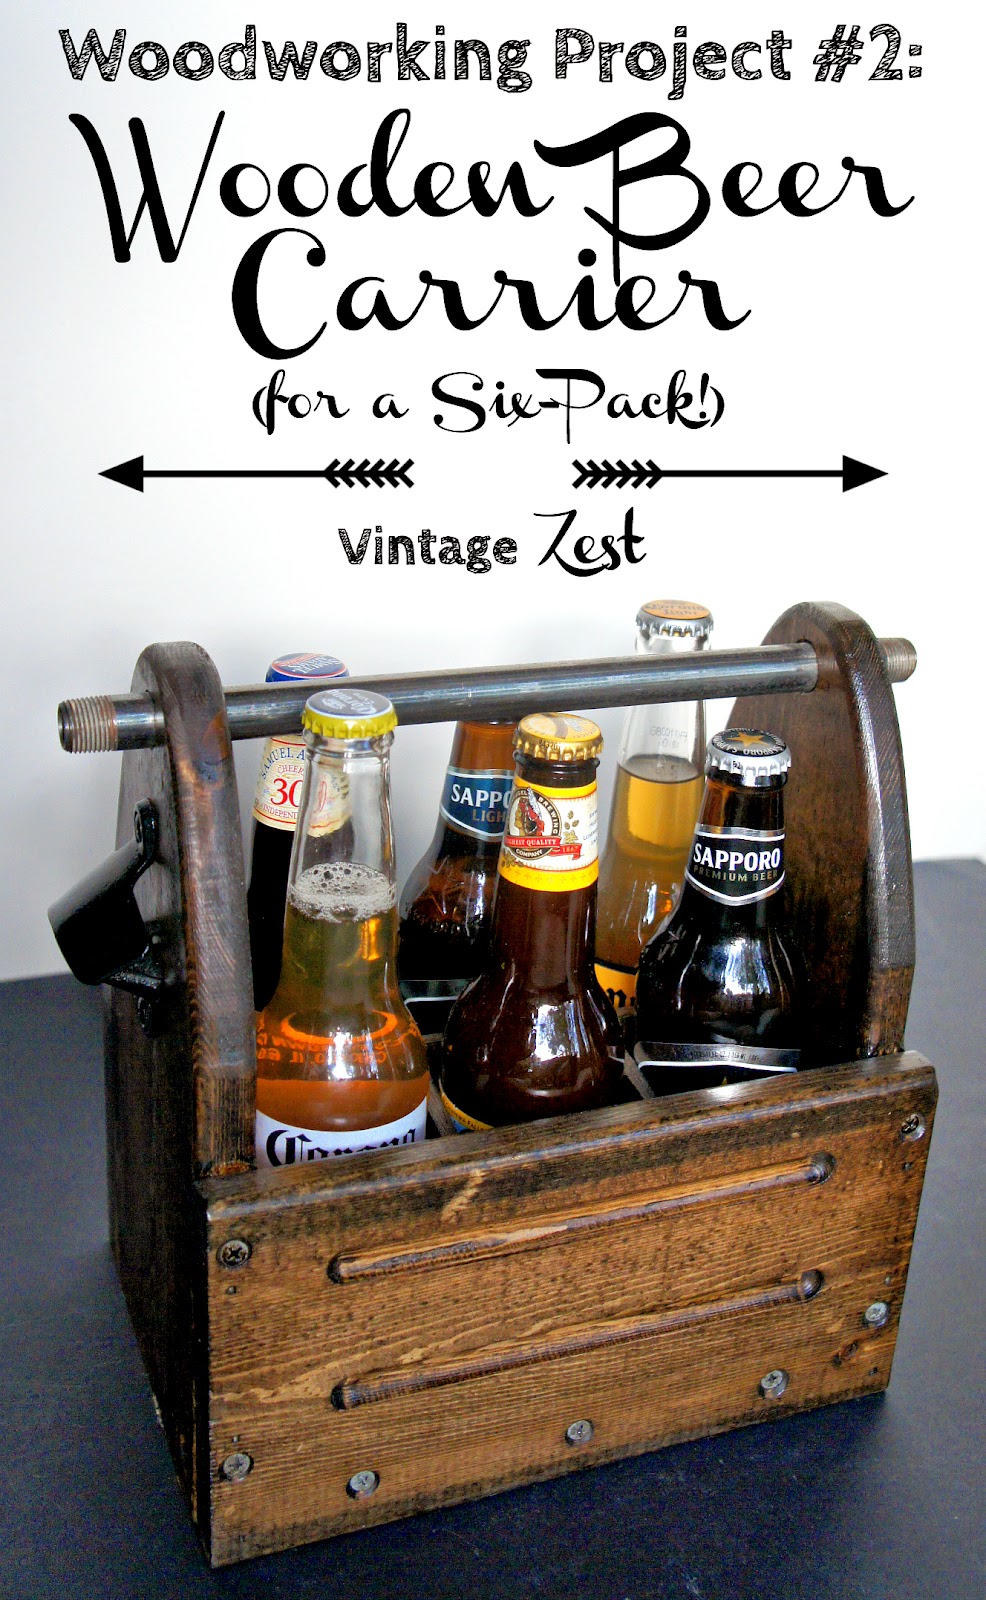 Wooden Beer Carrier (for a Six-Pack!) on Diane's Vintage Zest! #diy #woodworking #wood